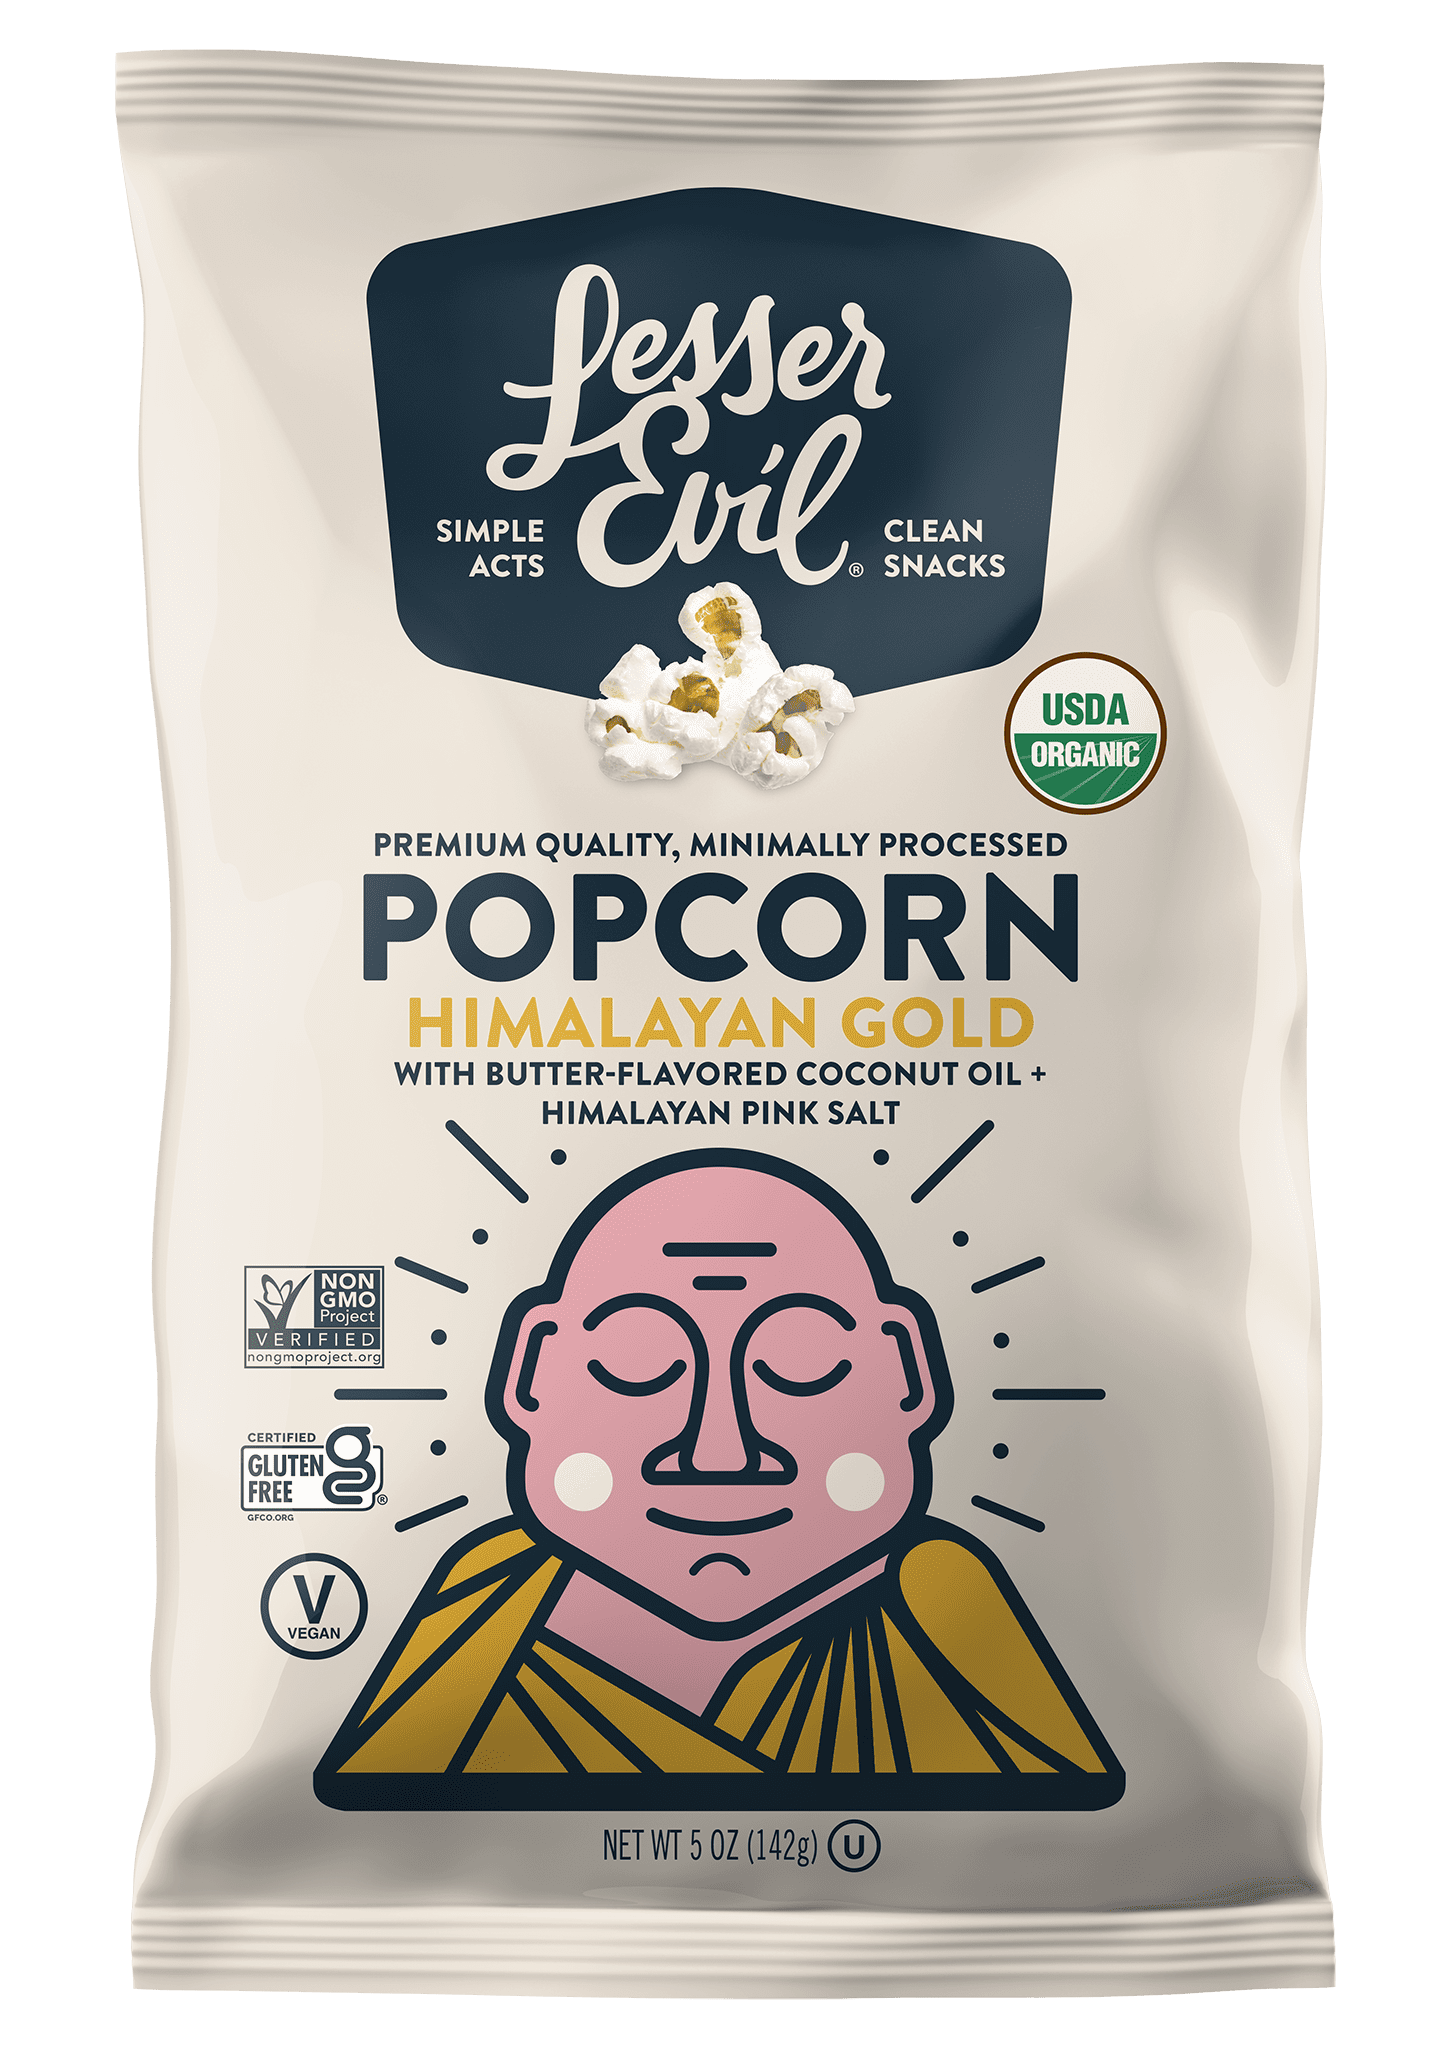 ''LesserEvil, Organic Popcorn Himalayan Gold'' 12 units per case 4.6 oz